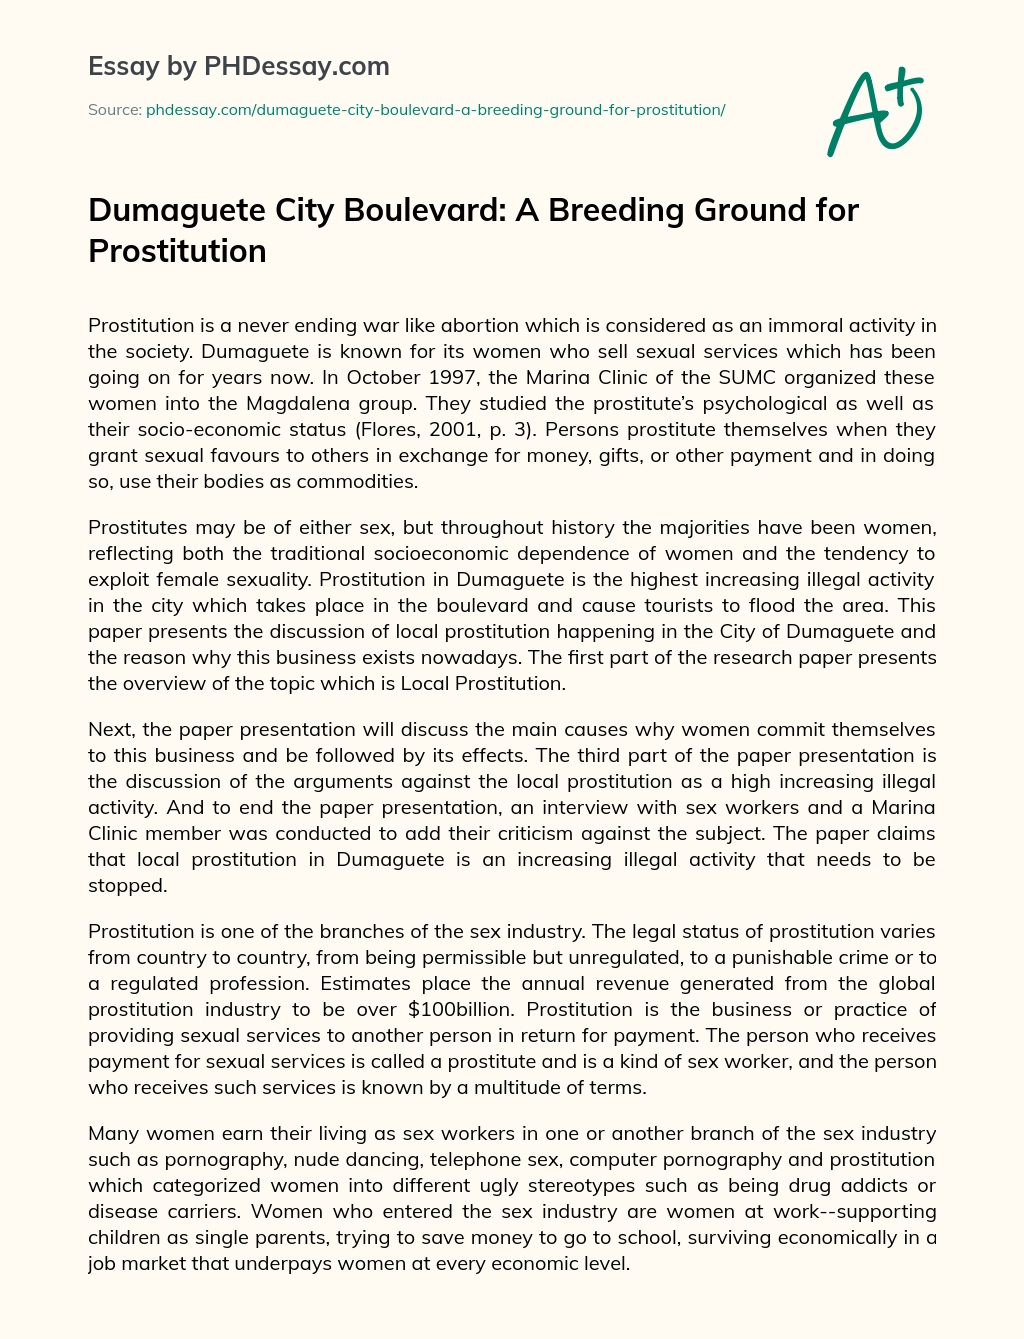 ﻿Dumaguete City Boulevard: A Breeding Ground for Prostitution essay